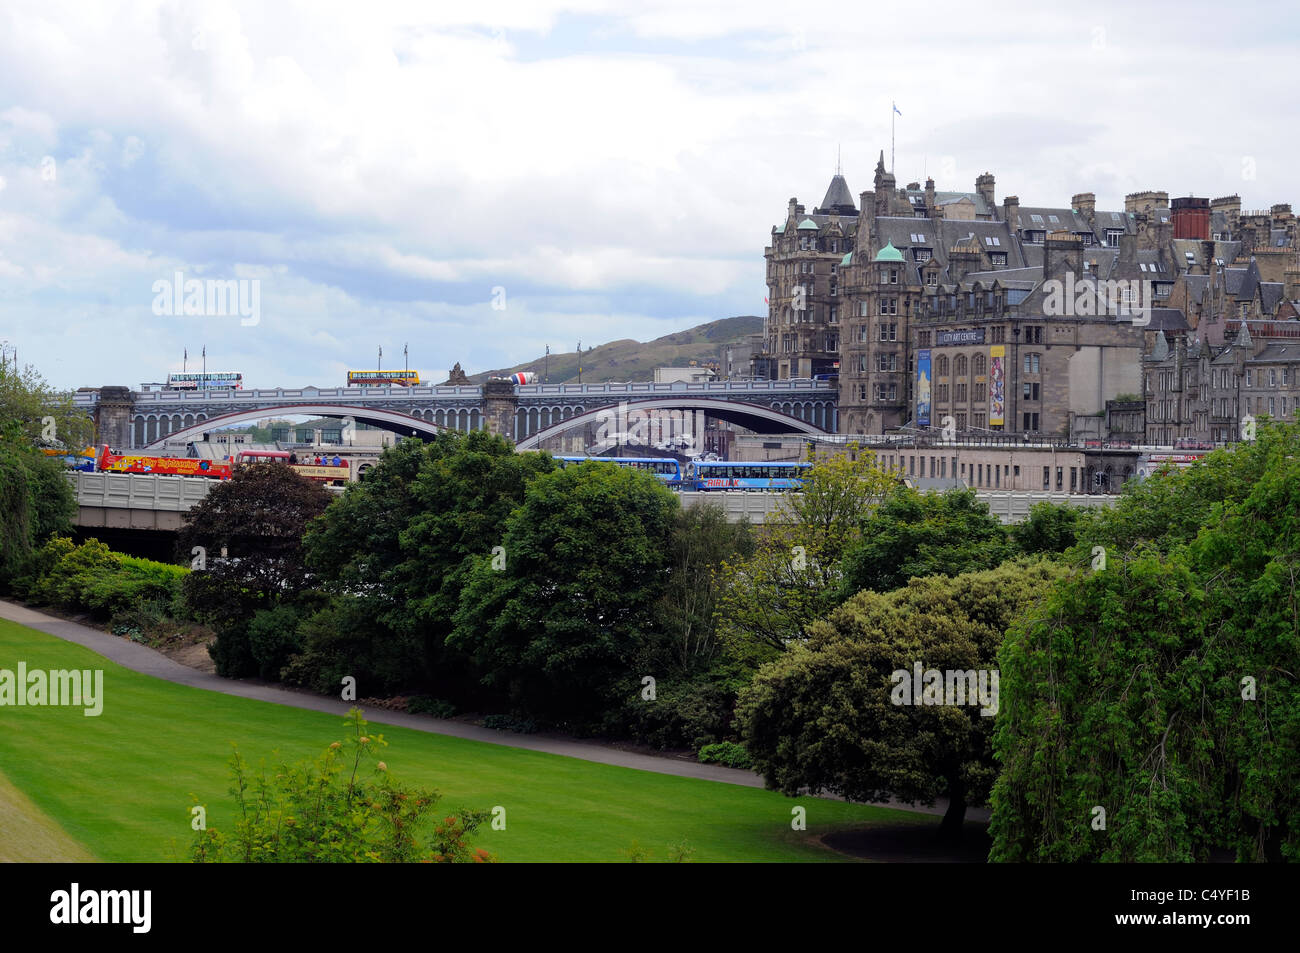 North Bridge Edinburgh With Princess Gardens In The Foreground Stock Photo